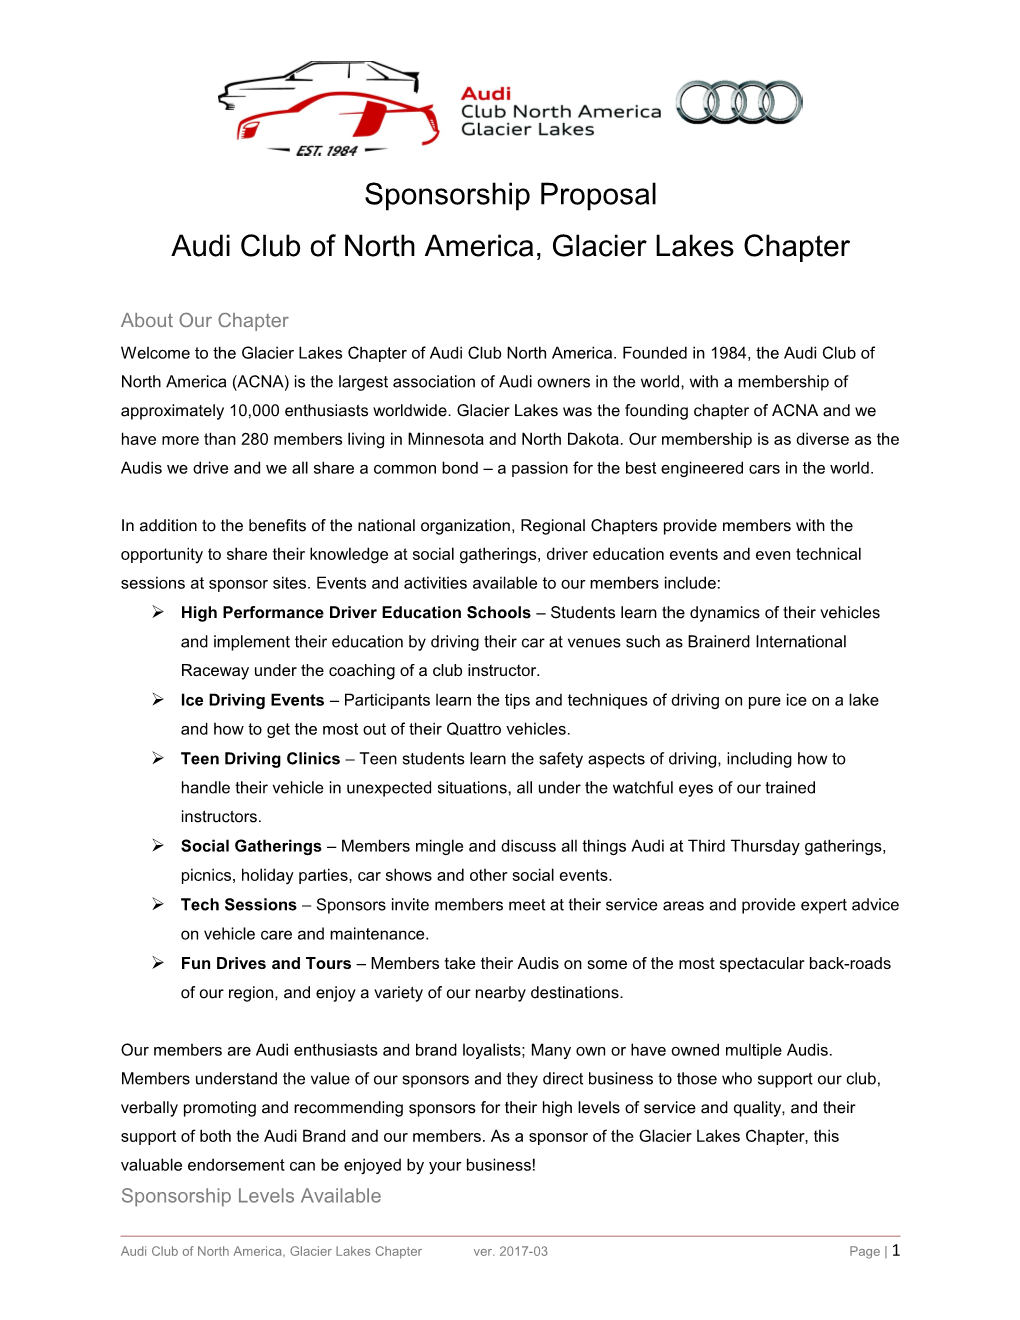 Audi Club of North America, Glacier Lakes Chapter